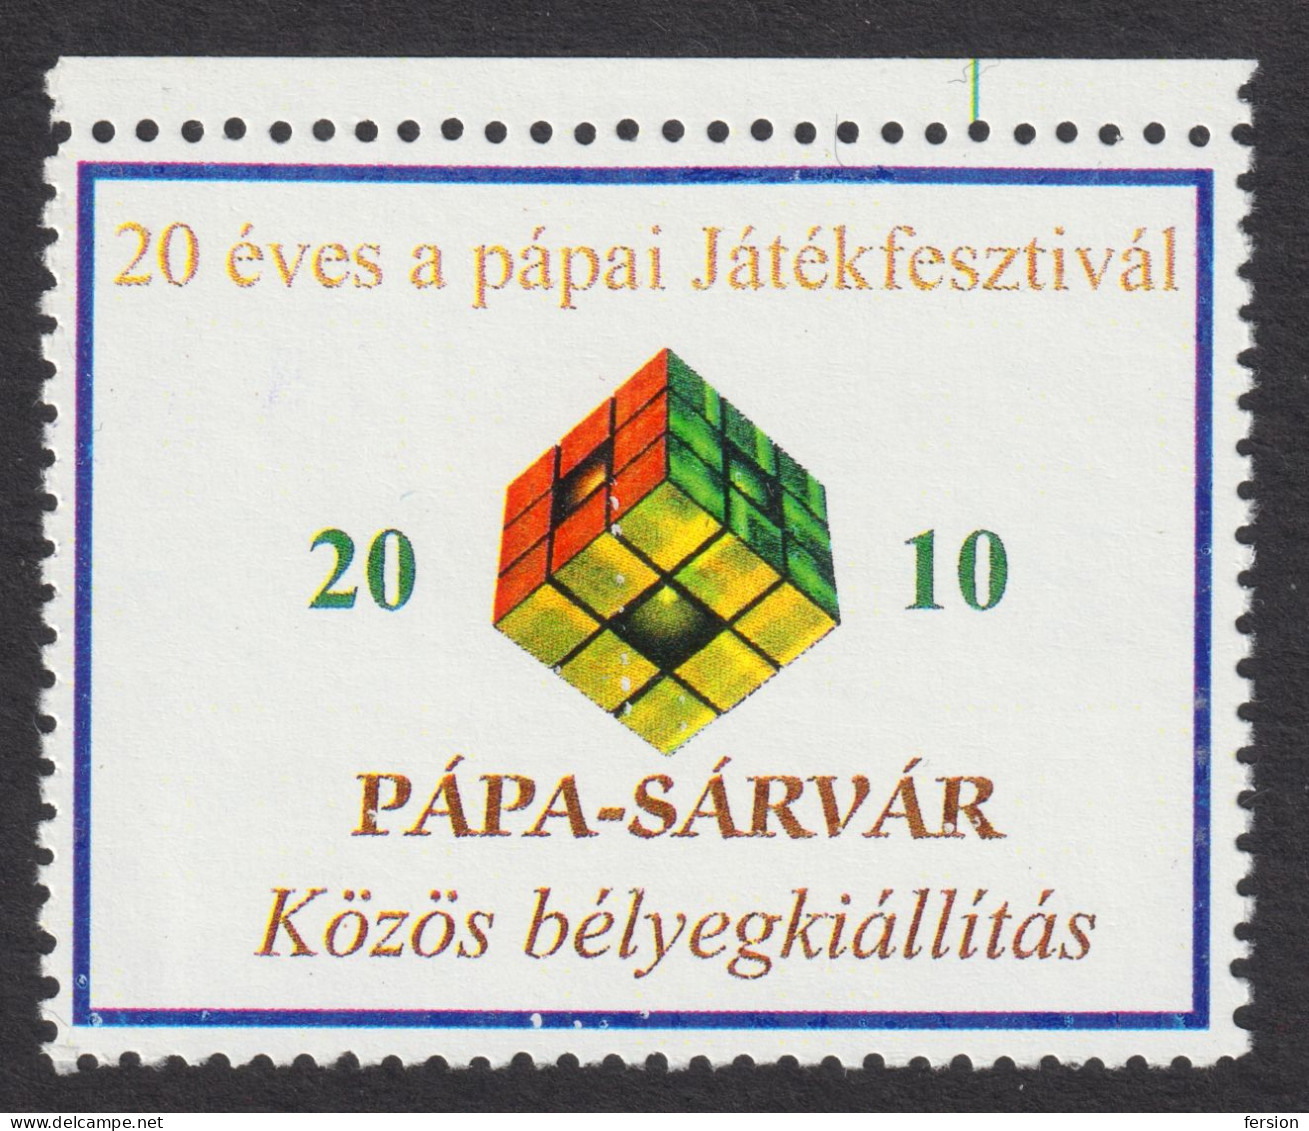 Rubik's Rubik Magic Cube TOY PLAY - Pápa / Sárvár Game Festival - LABEL CINDERELLA VIGNETTE Hungary - Non Classificati